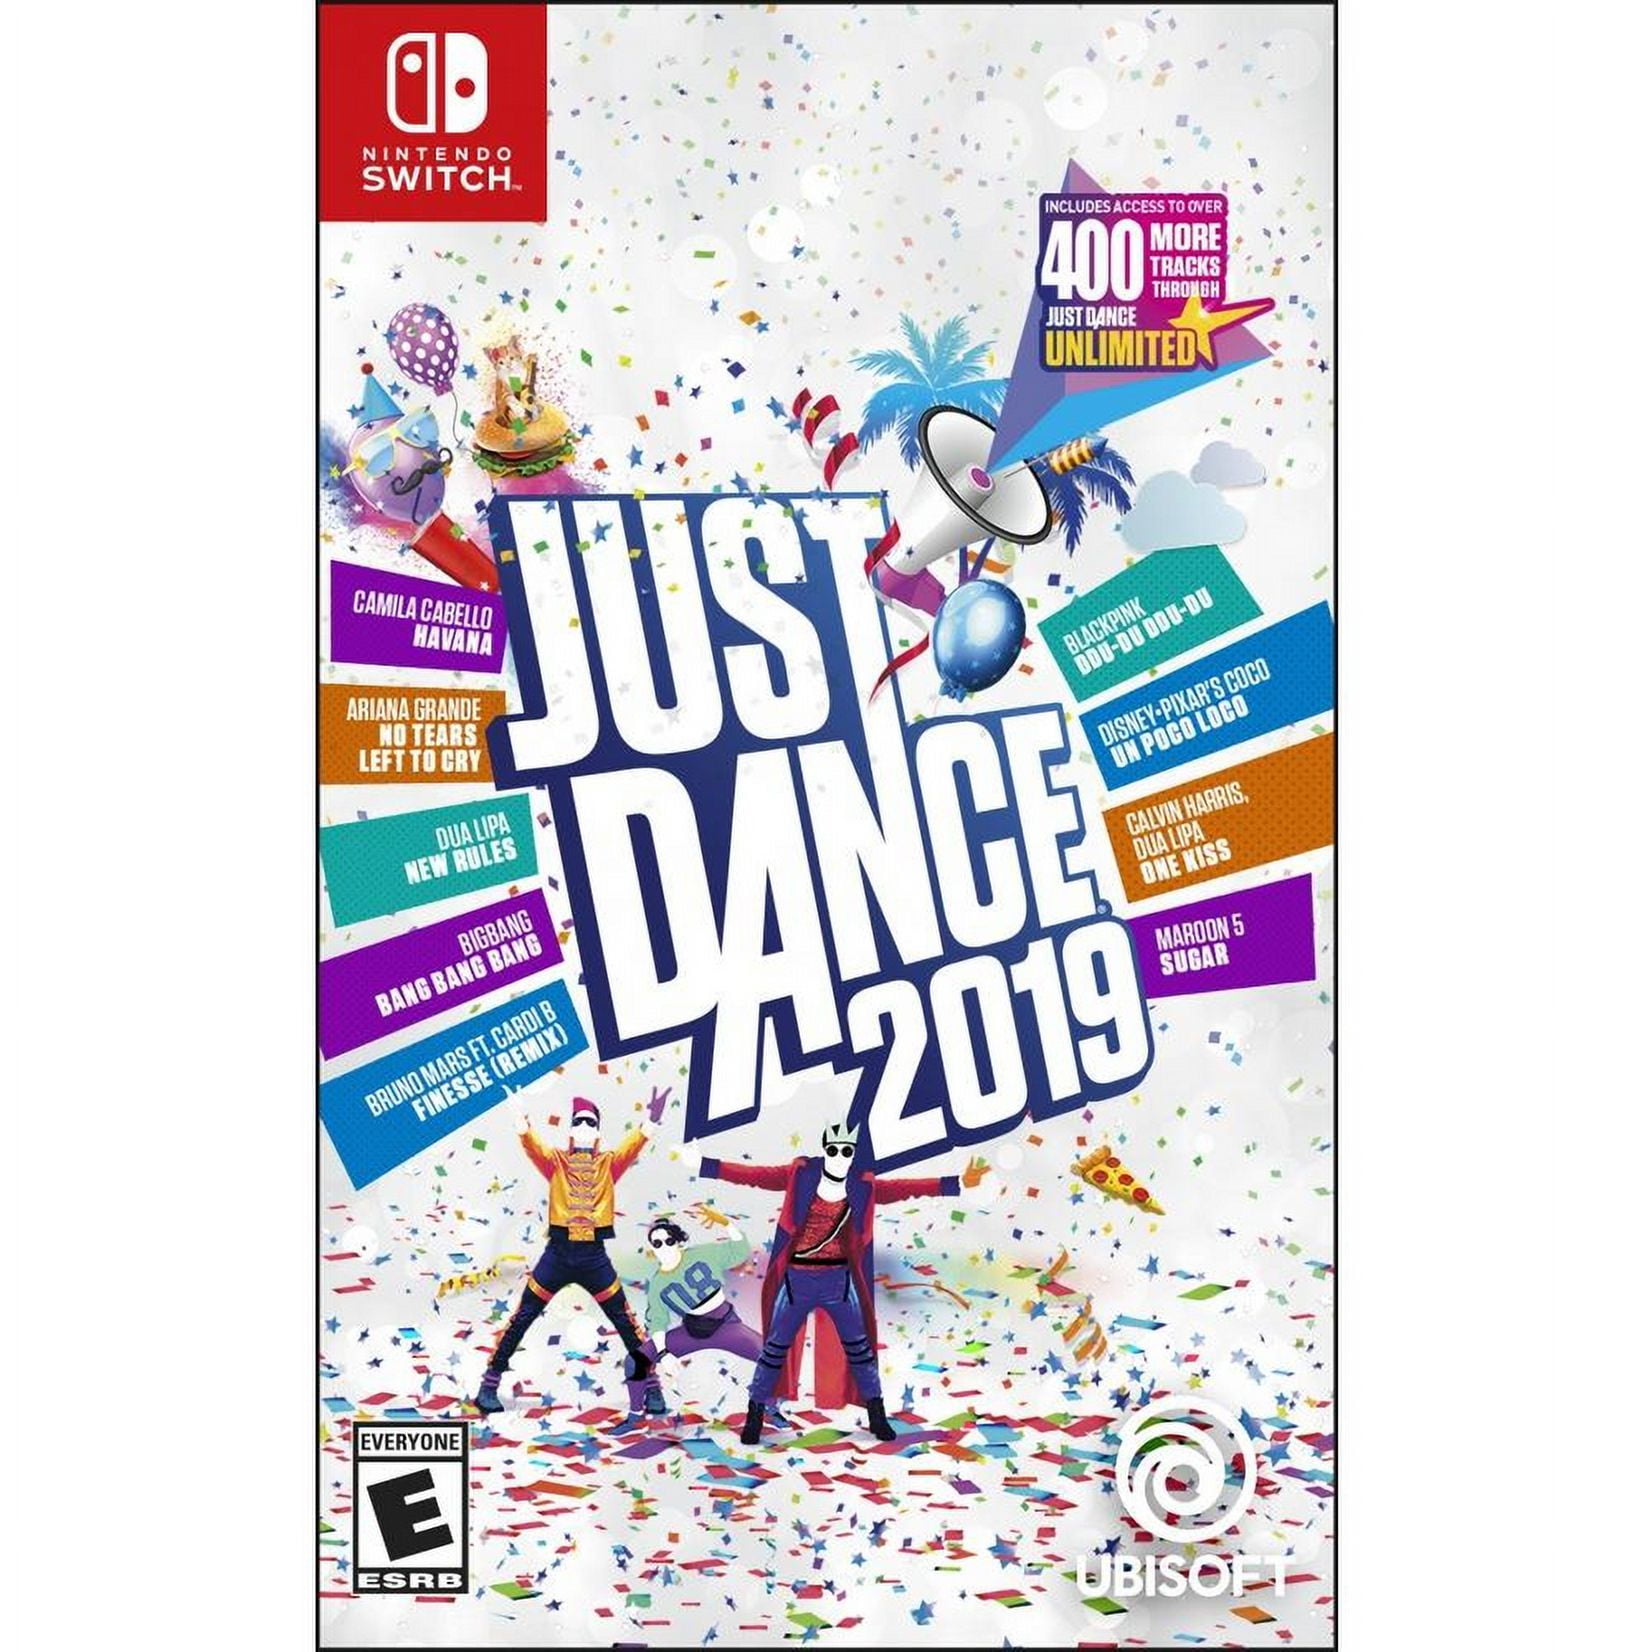 Edition Just Standard Nintendo 2019 Dance Switch -